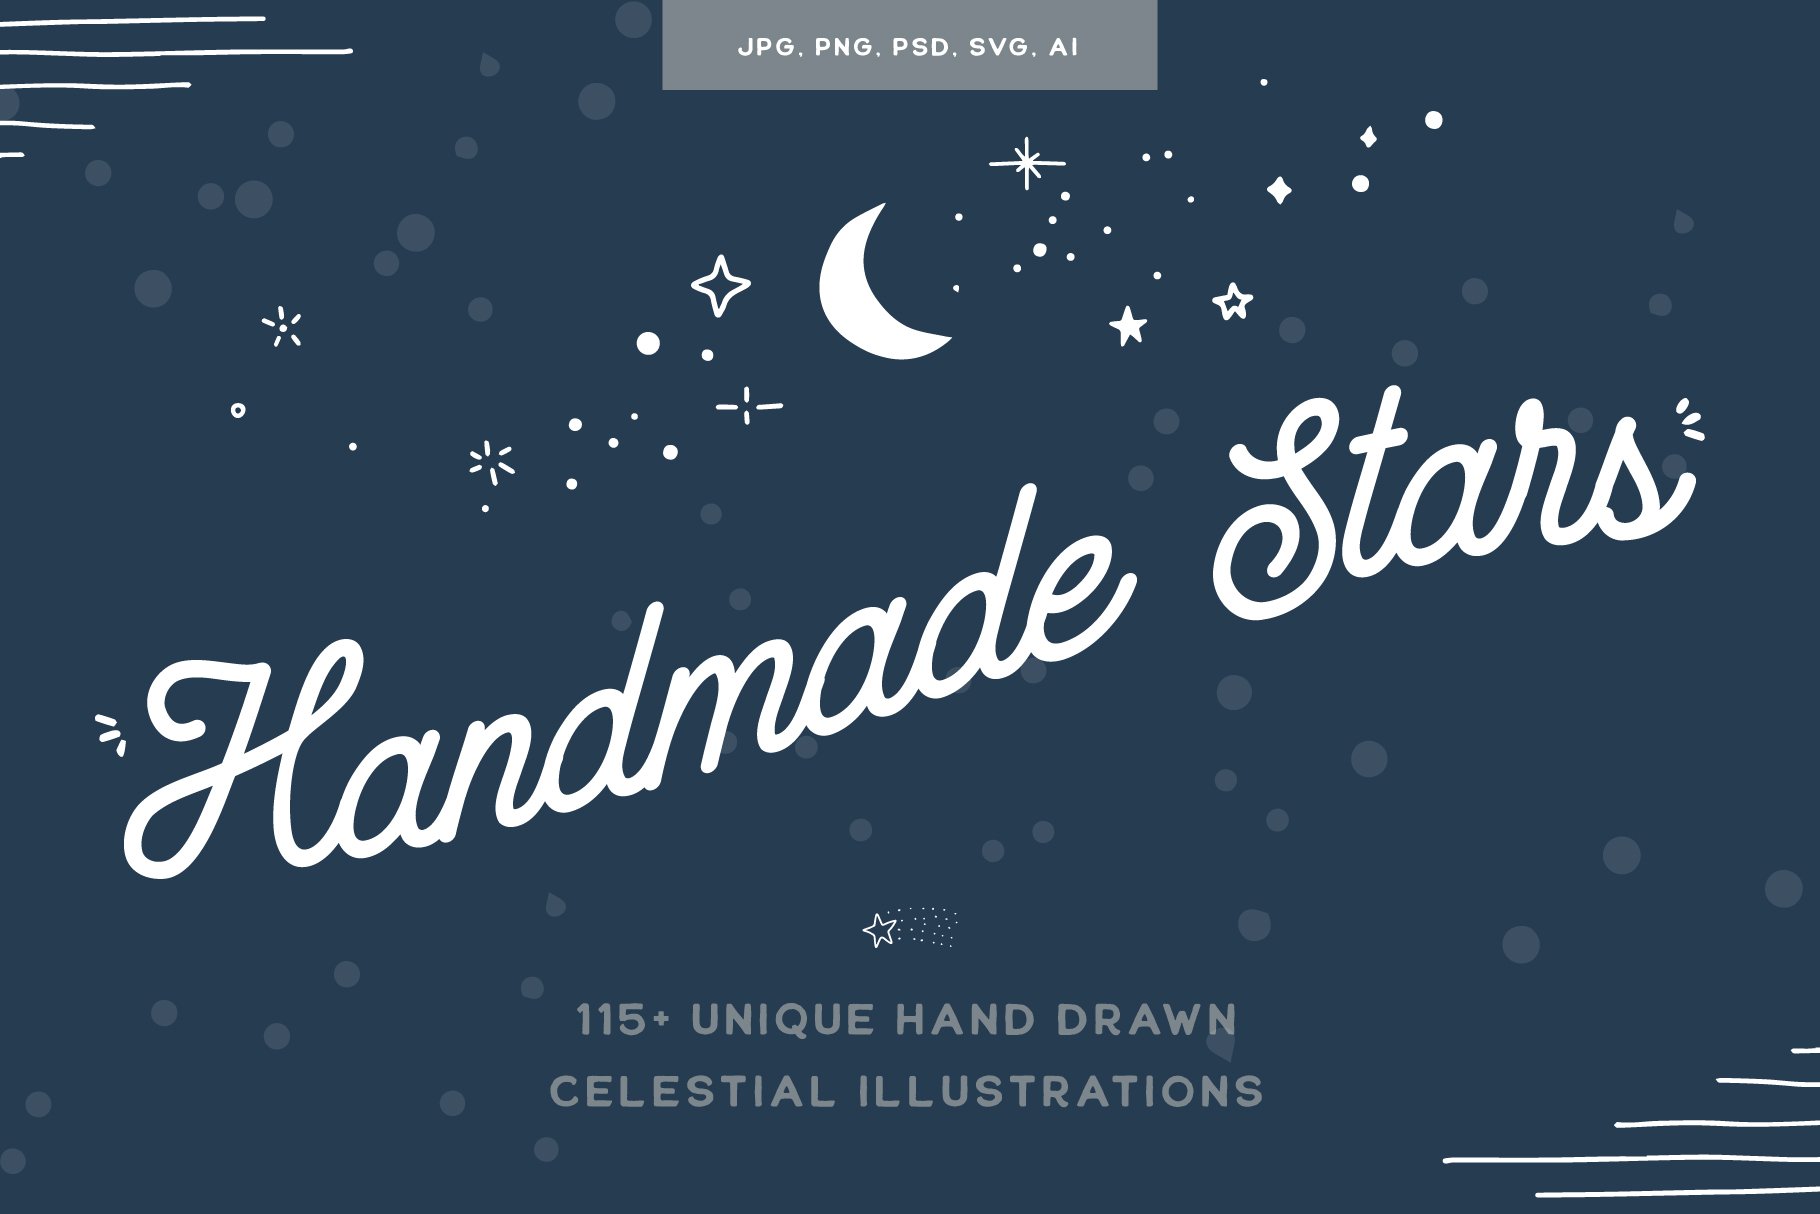 Handmade Stars cover image.